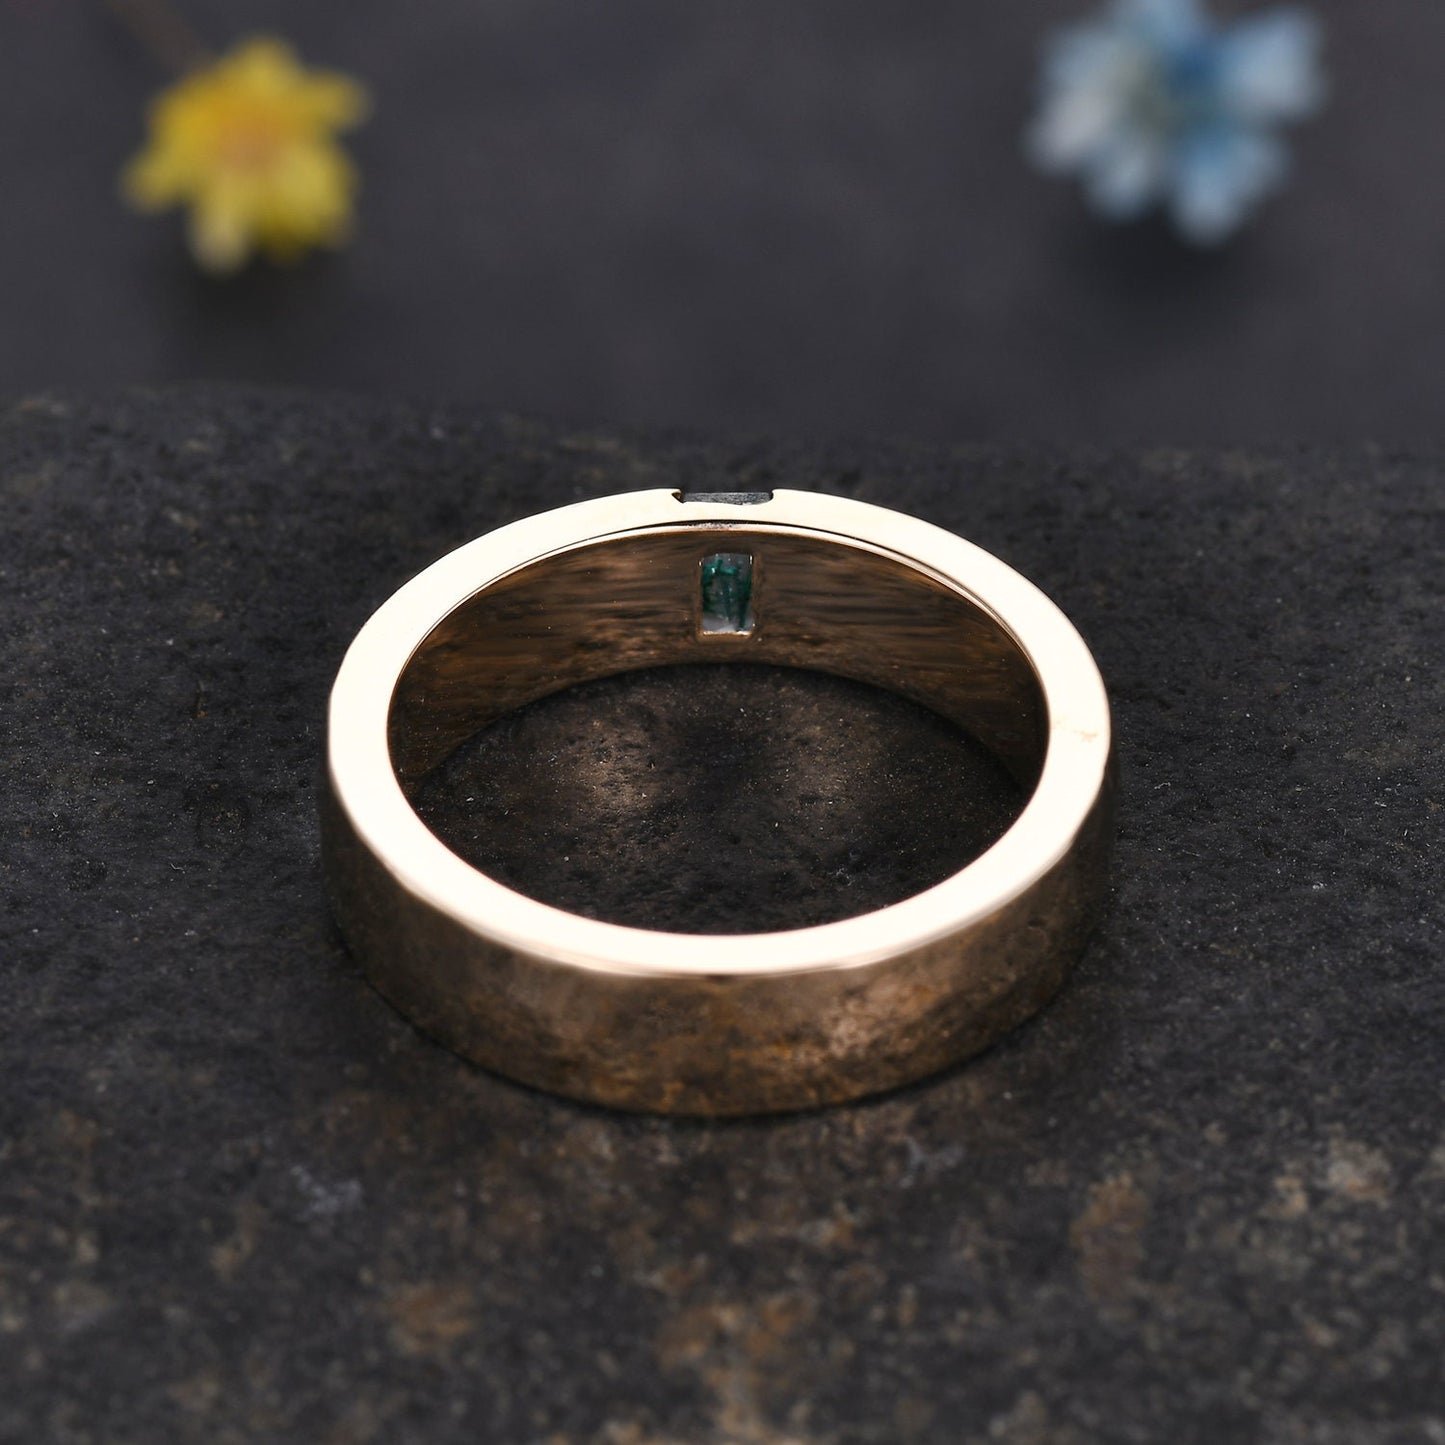 Mens London Blue Topaz Wedding Band Baguette Cut Blue Gem Band 5mm Solid Gold Ring Hammered Stacking Matching Band Retro Vintage Ring Gift